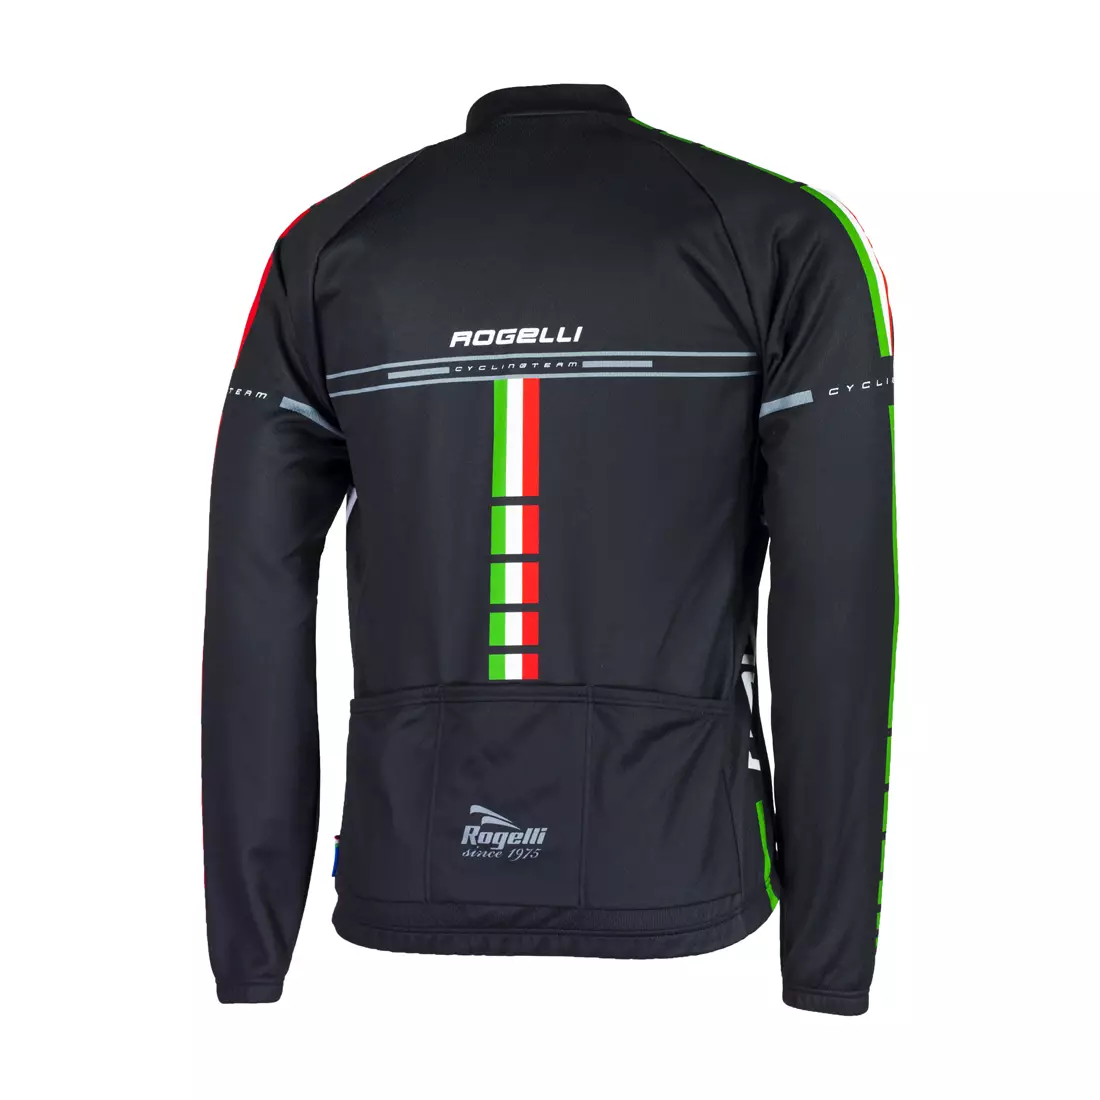 ROGELLI BIKE TEAM - men's cycling sweatshirt 001.967, color: black